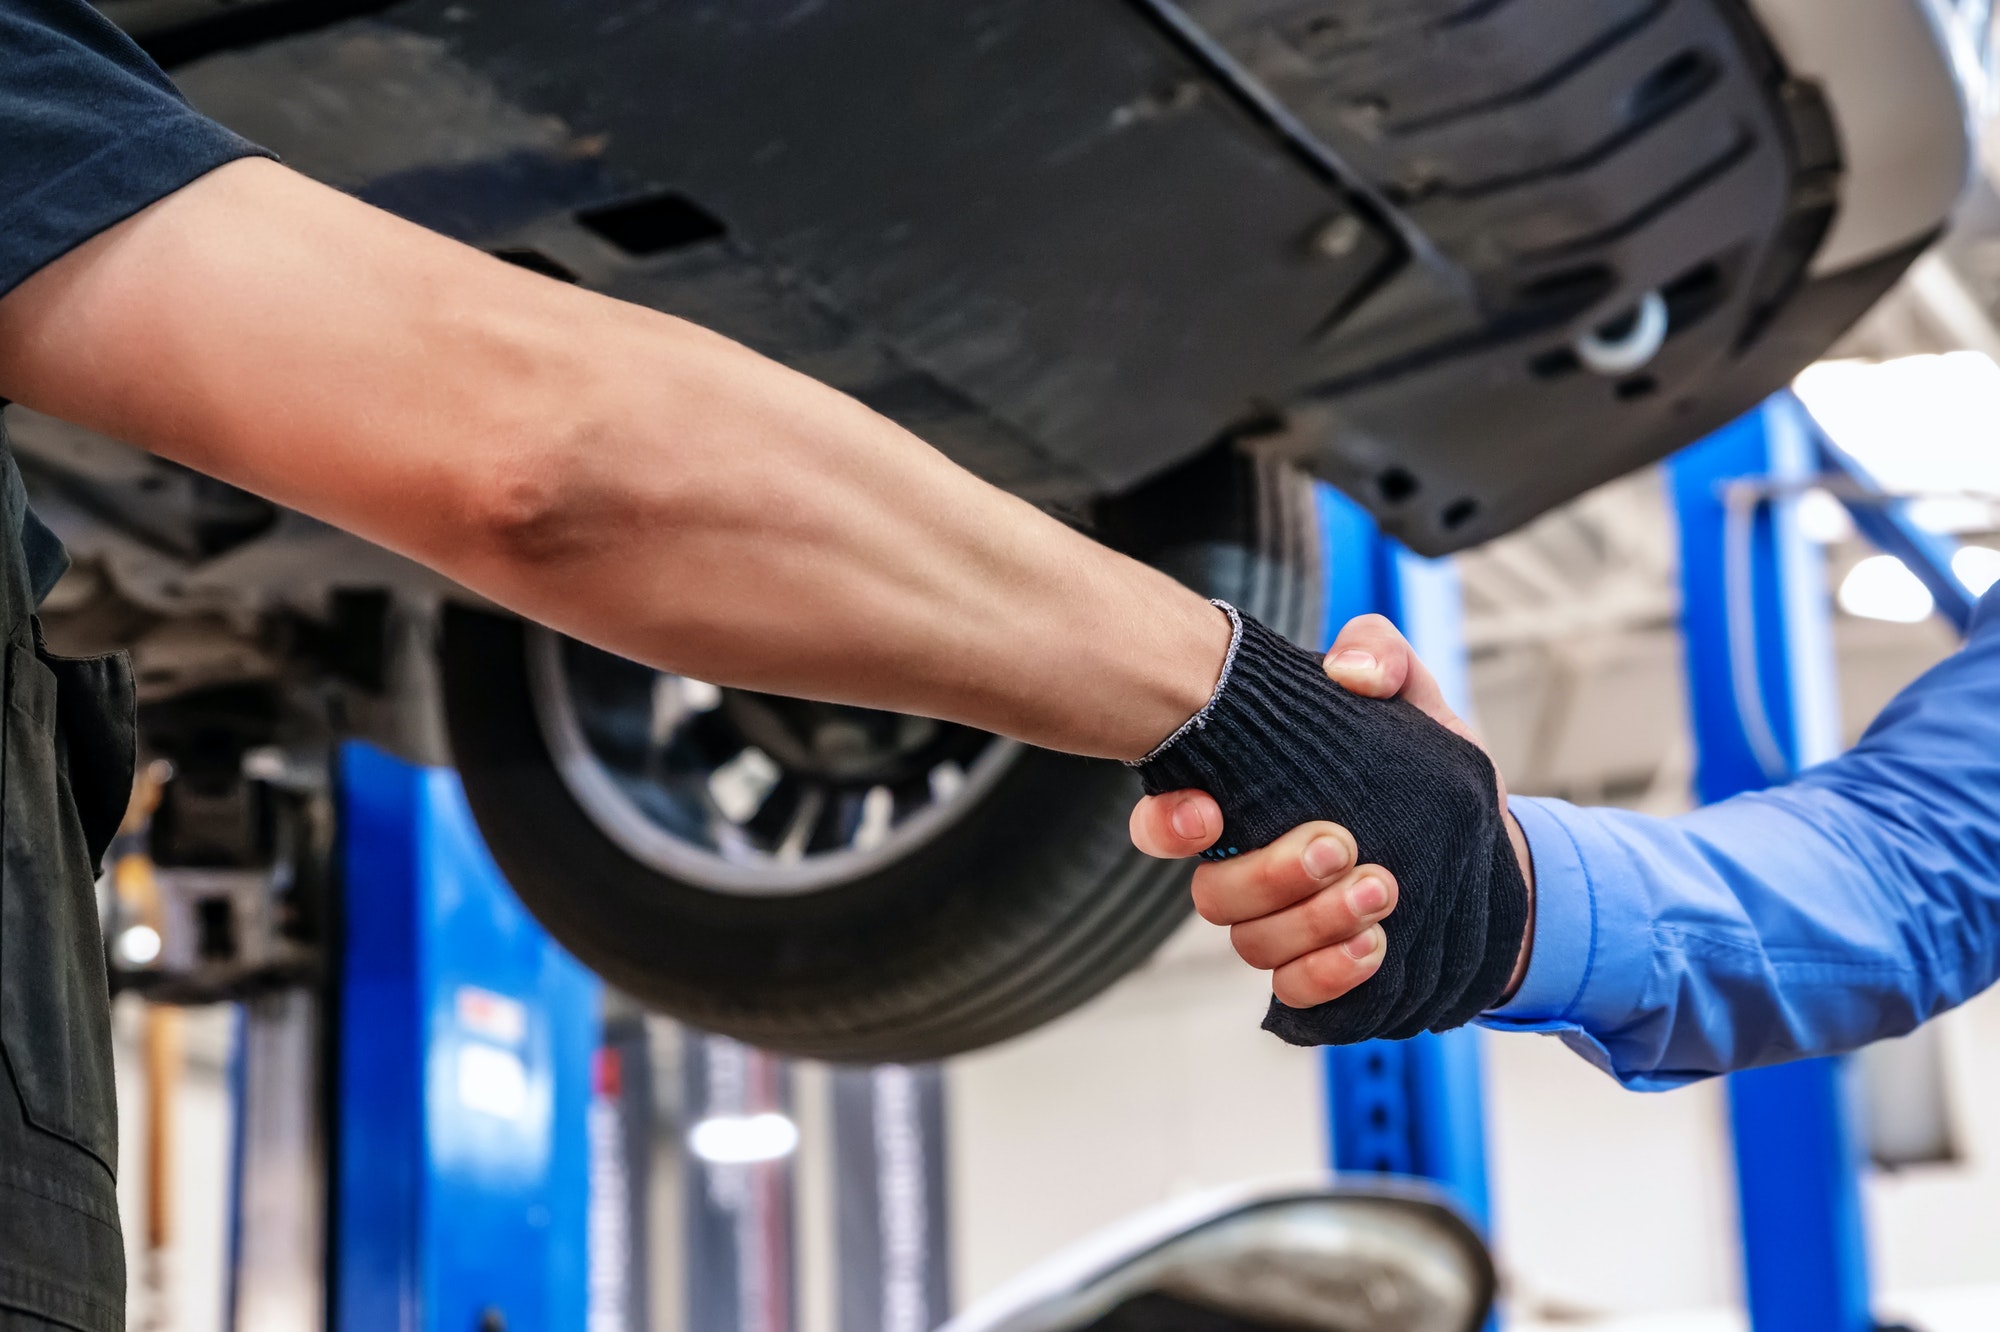 Customer and auto service mechanic shake hands. Car repair and maintenance